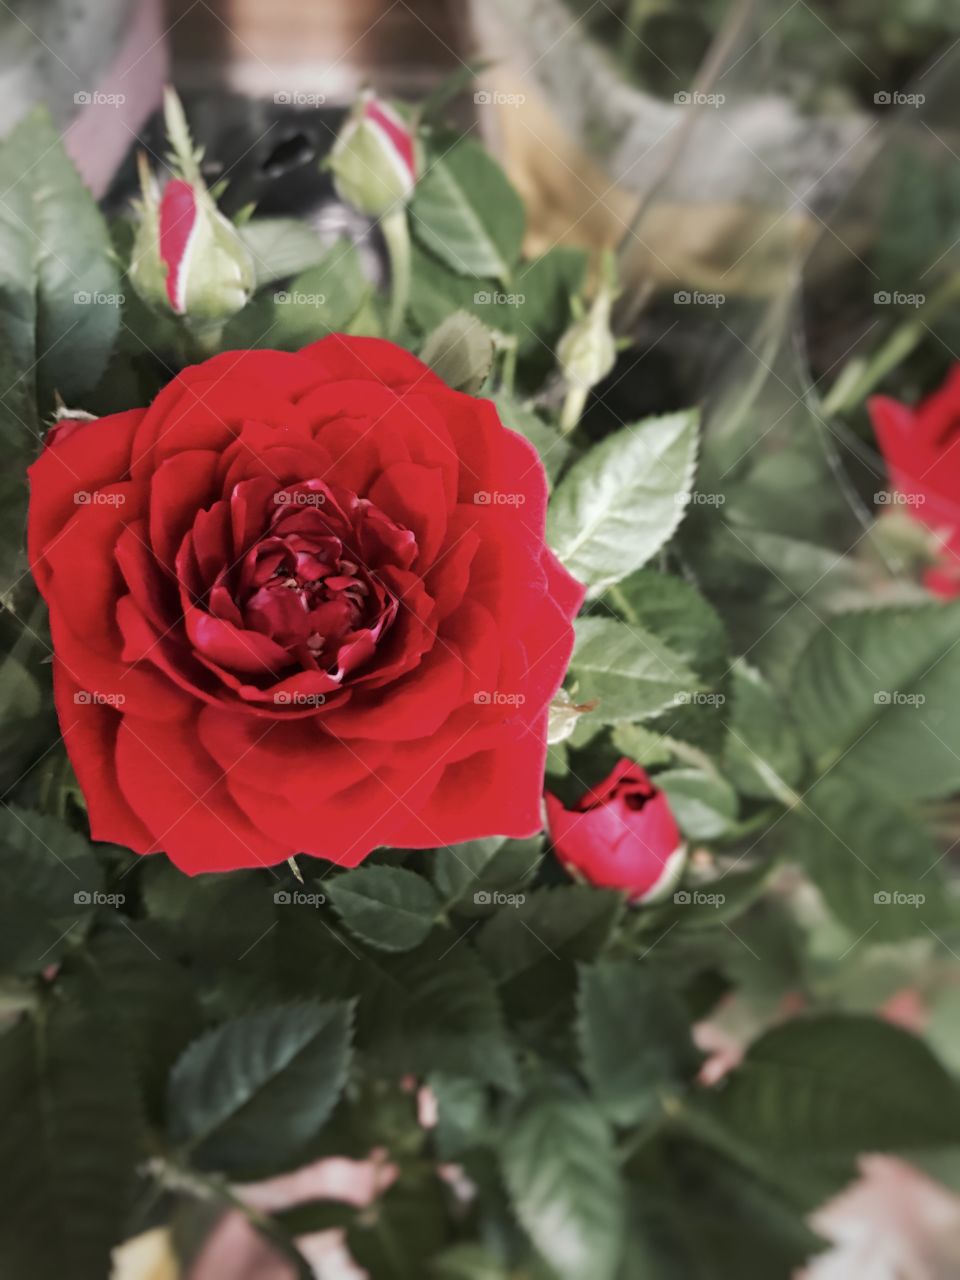 Red rose #flower #petals #wedding #love #romantic